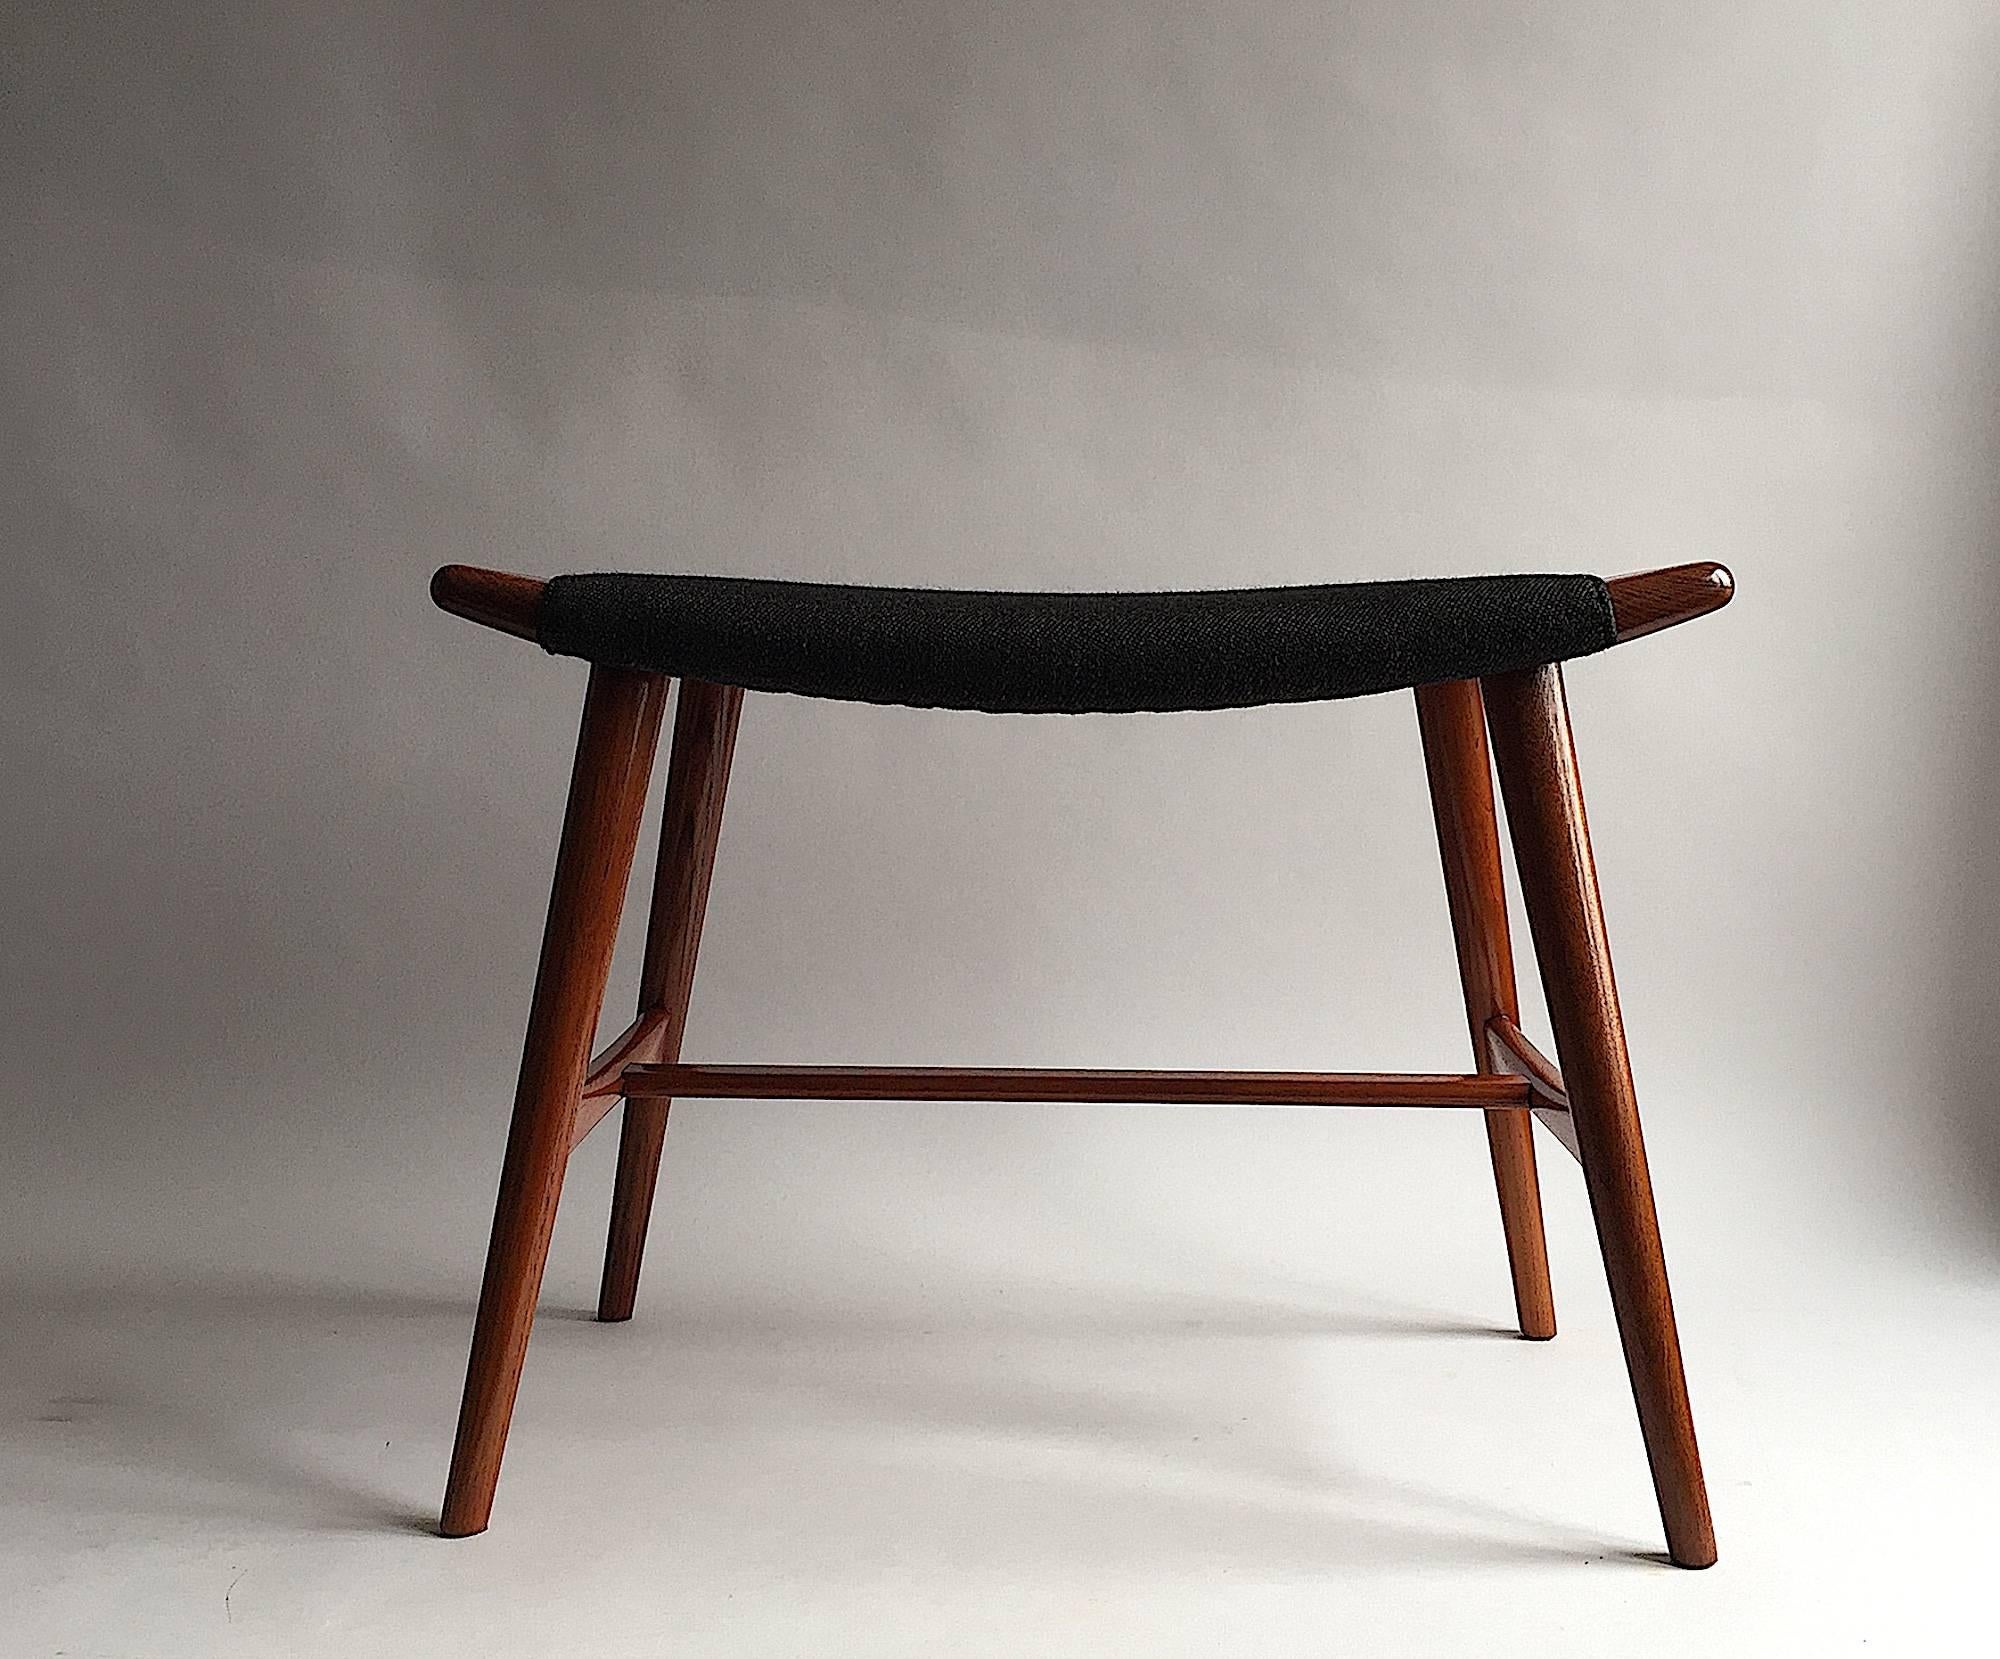 Hans J. Wegner (Denmark)

Teak frame Piano bench from Hans J. Wegner with original dark grey wool upholstery. Made by AP Stolen, Denmark (Anker Pedersen). 

Model AP-30. Designed 1957

This Wegner piano stool, though it was made to stand as